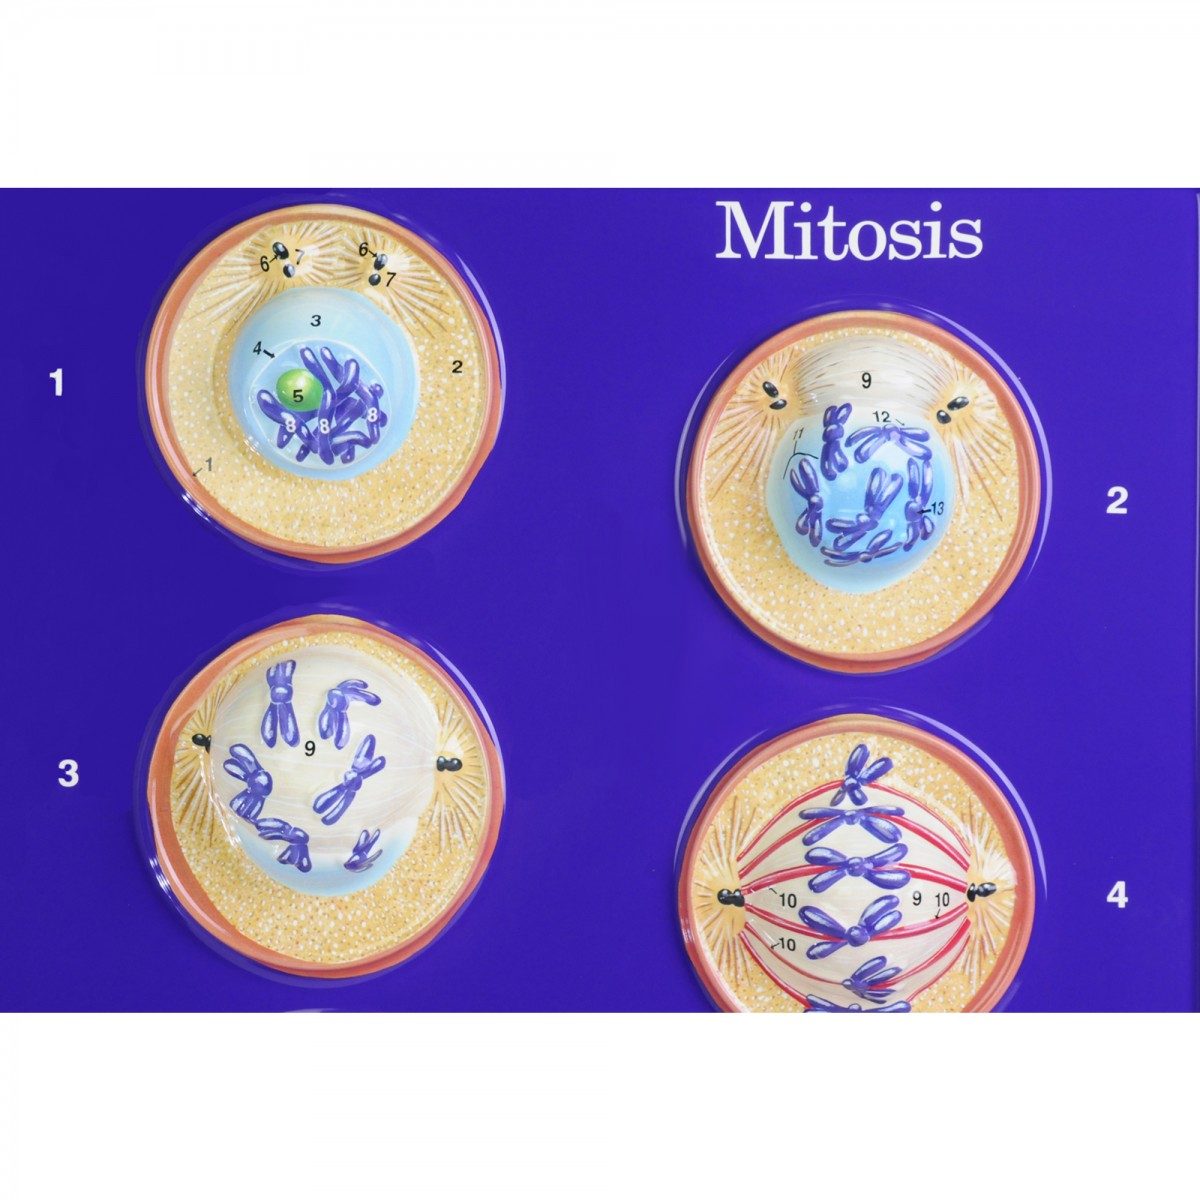 Mitosis Relief Model - Διερευνητική Μάθηση